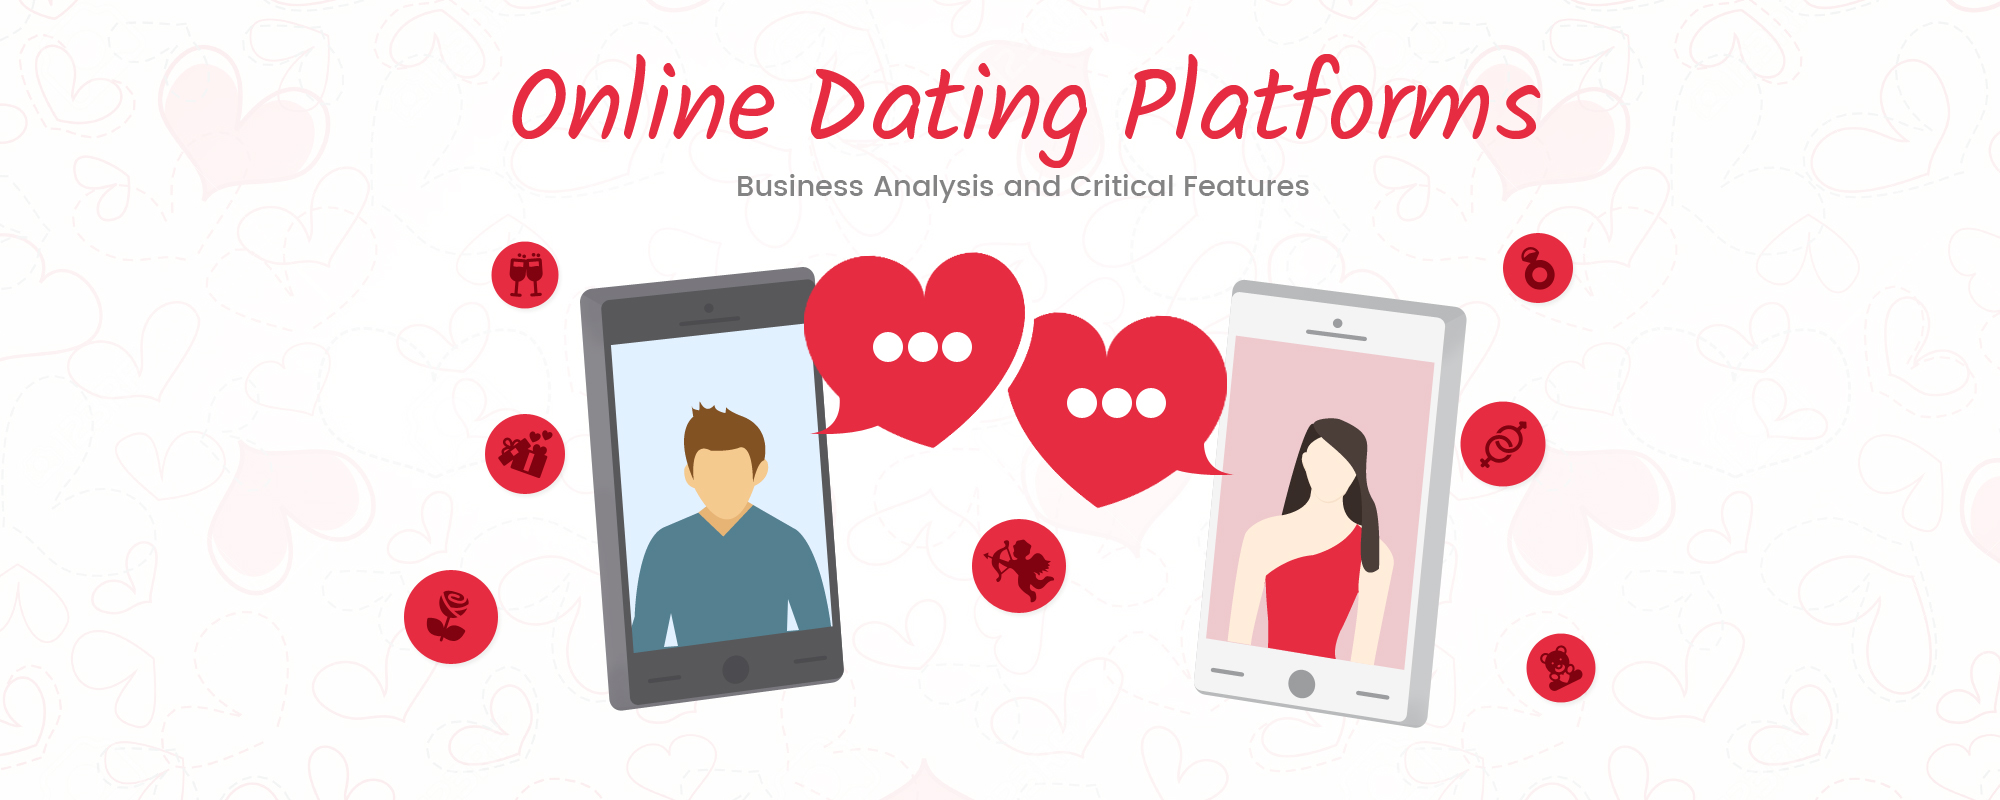 BestSmmPanel Online Dating: 6 Grammatical Mistakes You Mustn't Make Online Dating Platform Main